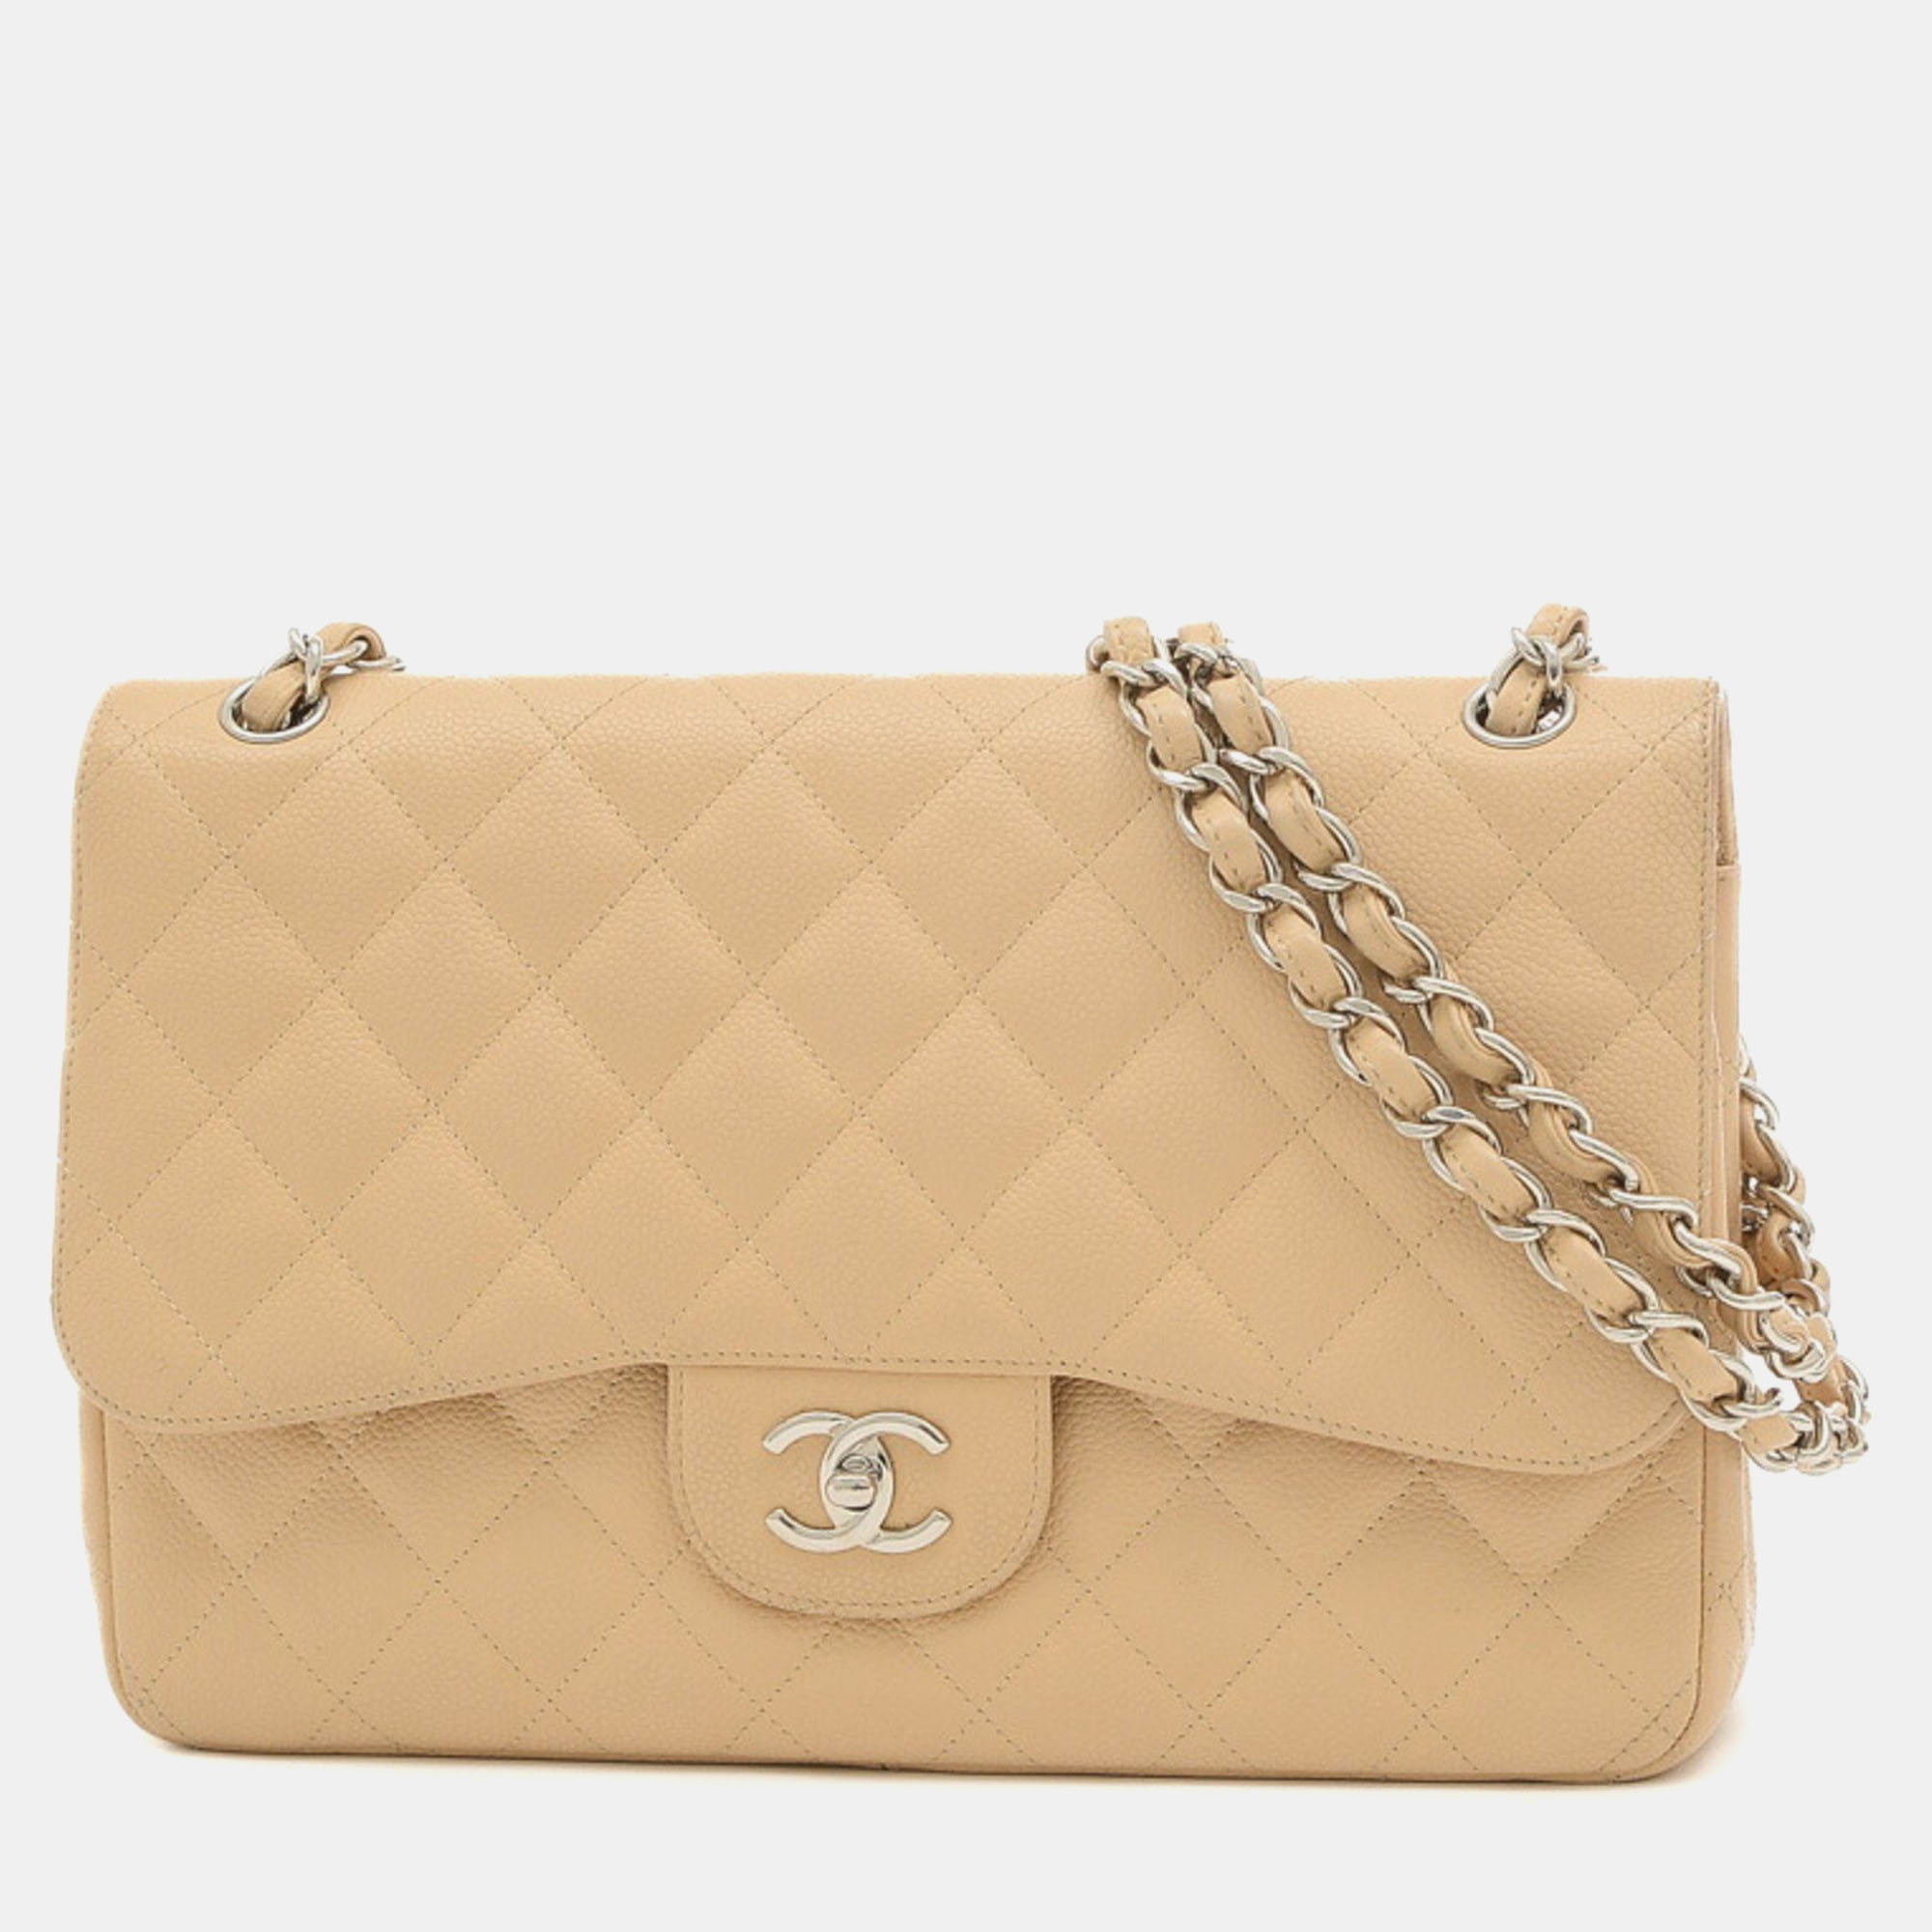 Chanel beige caviar leather jumbo classic double flap bag